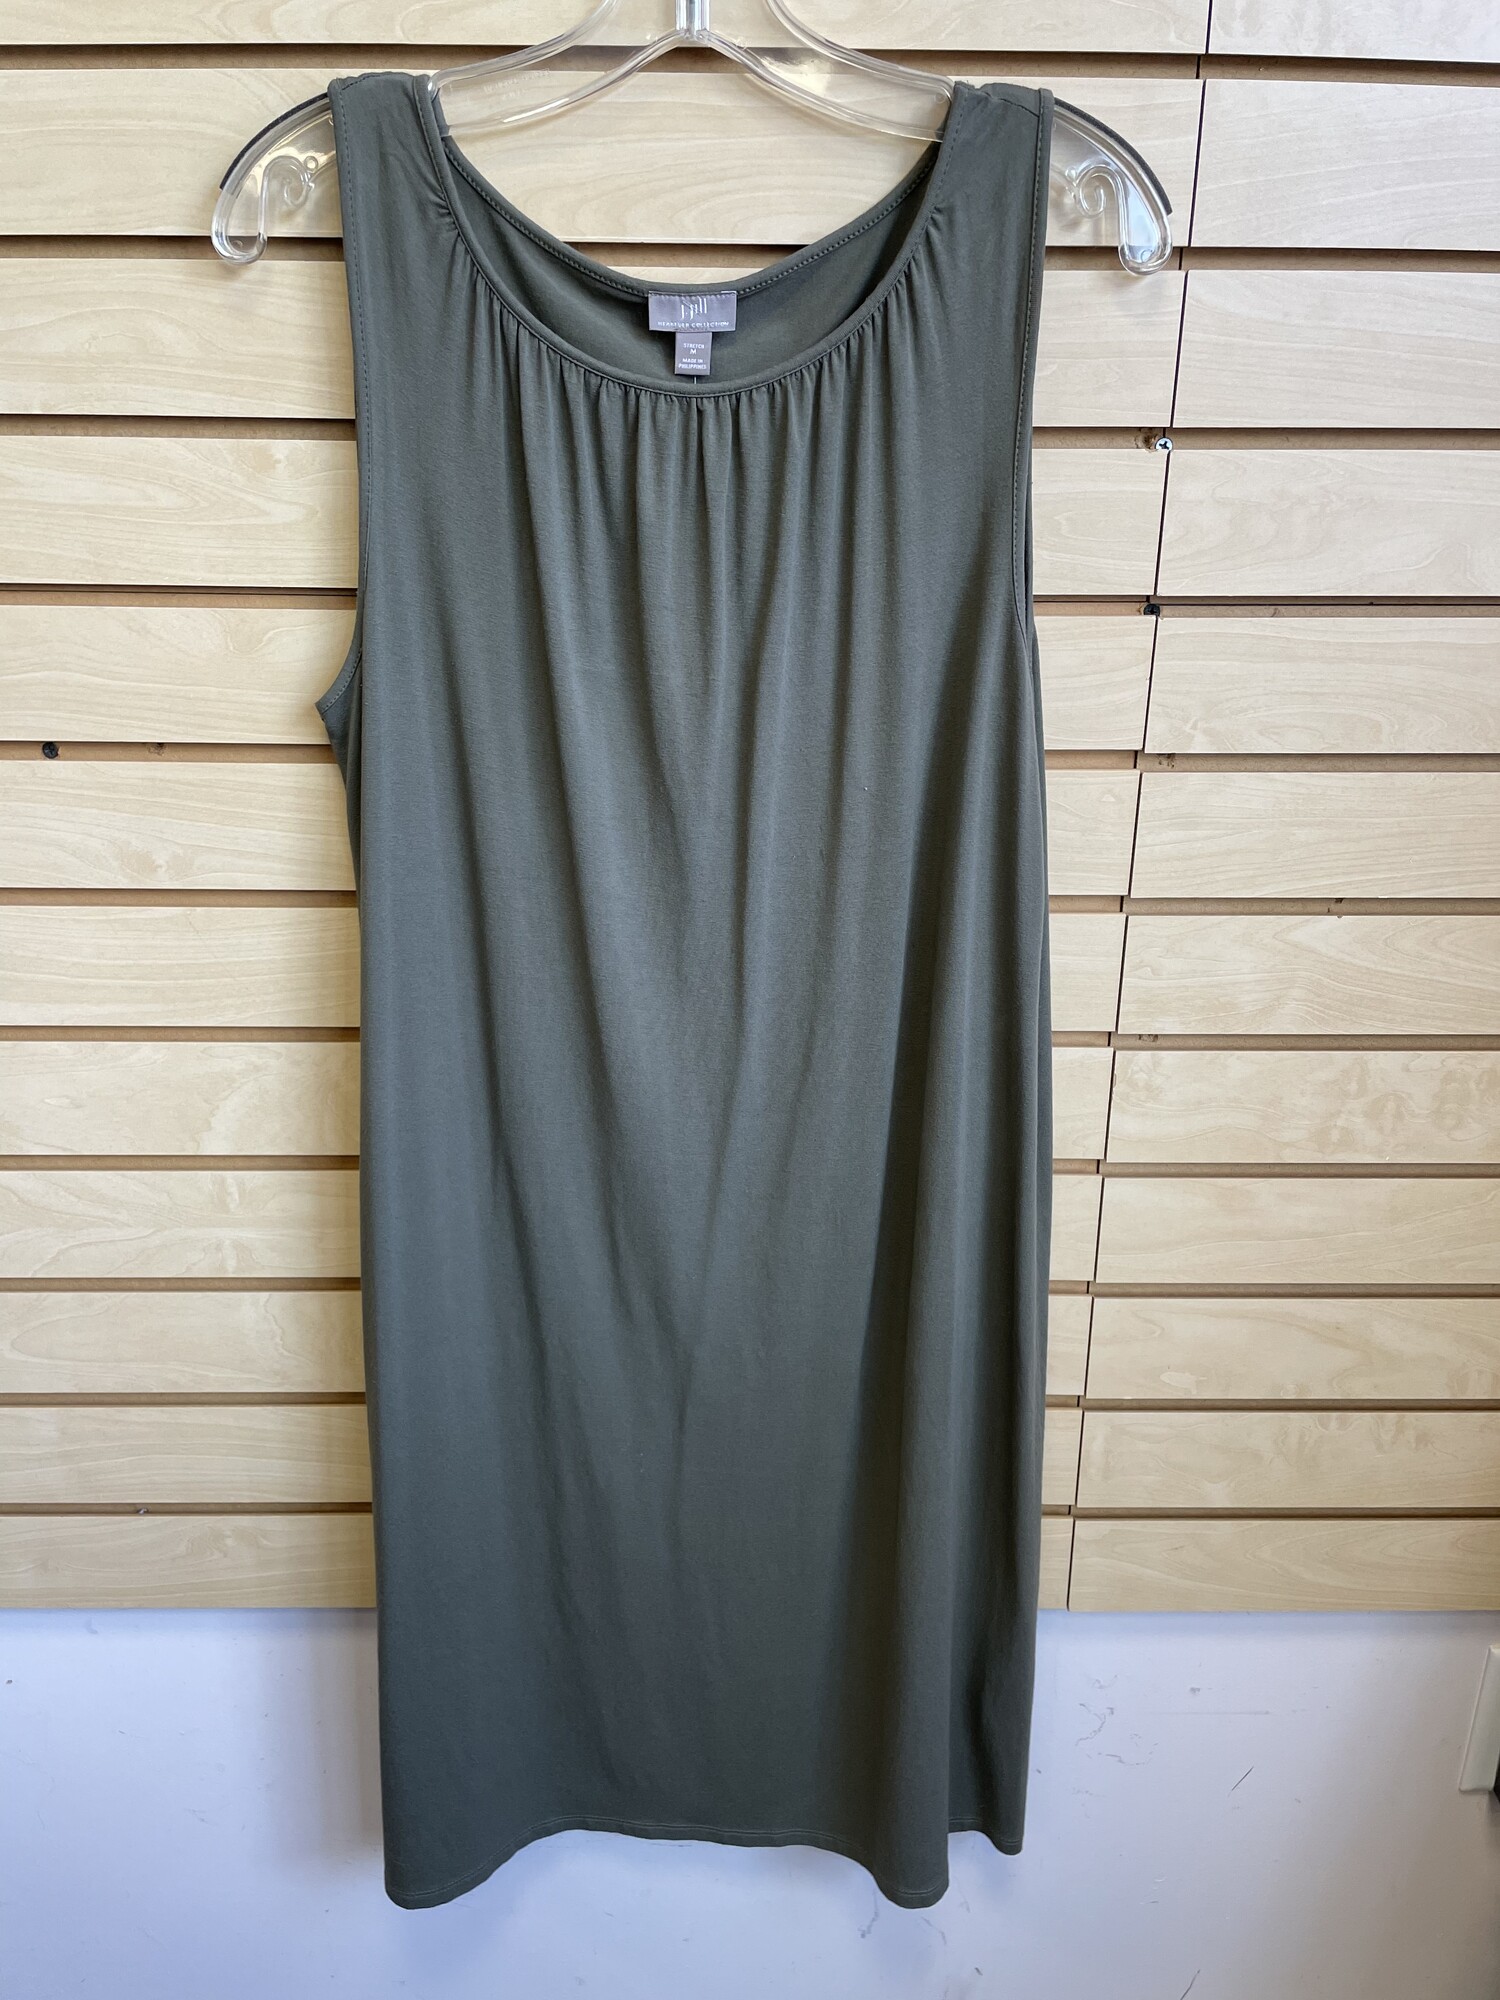 J Jill Tank Dress, Mid Calf Length, Army Green, Strech Fabric, Size: Medium